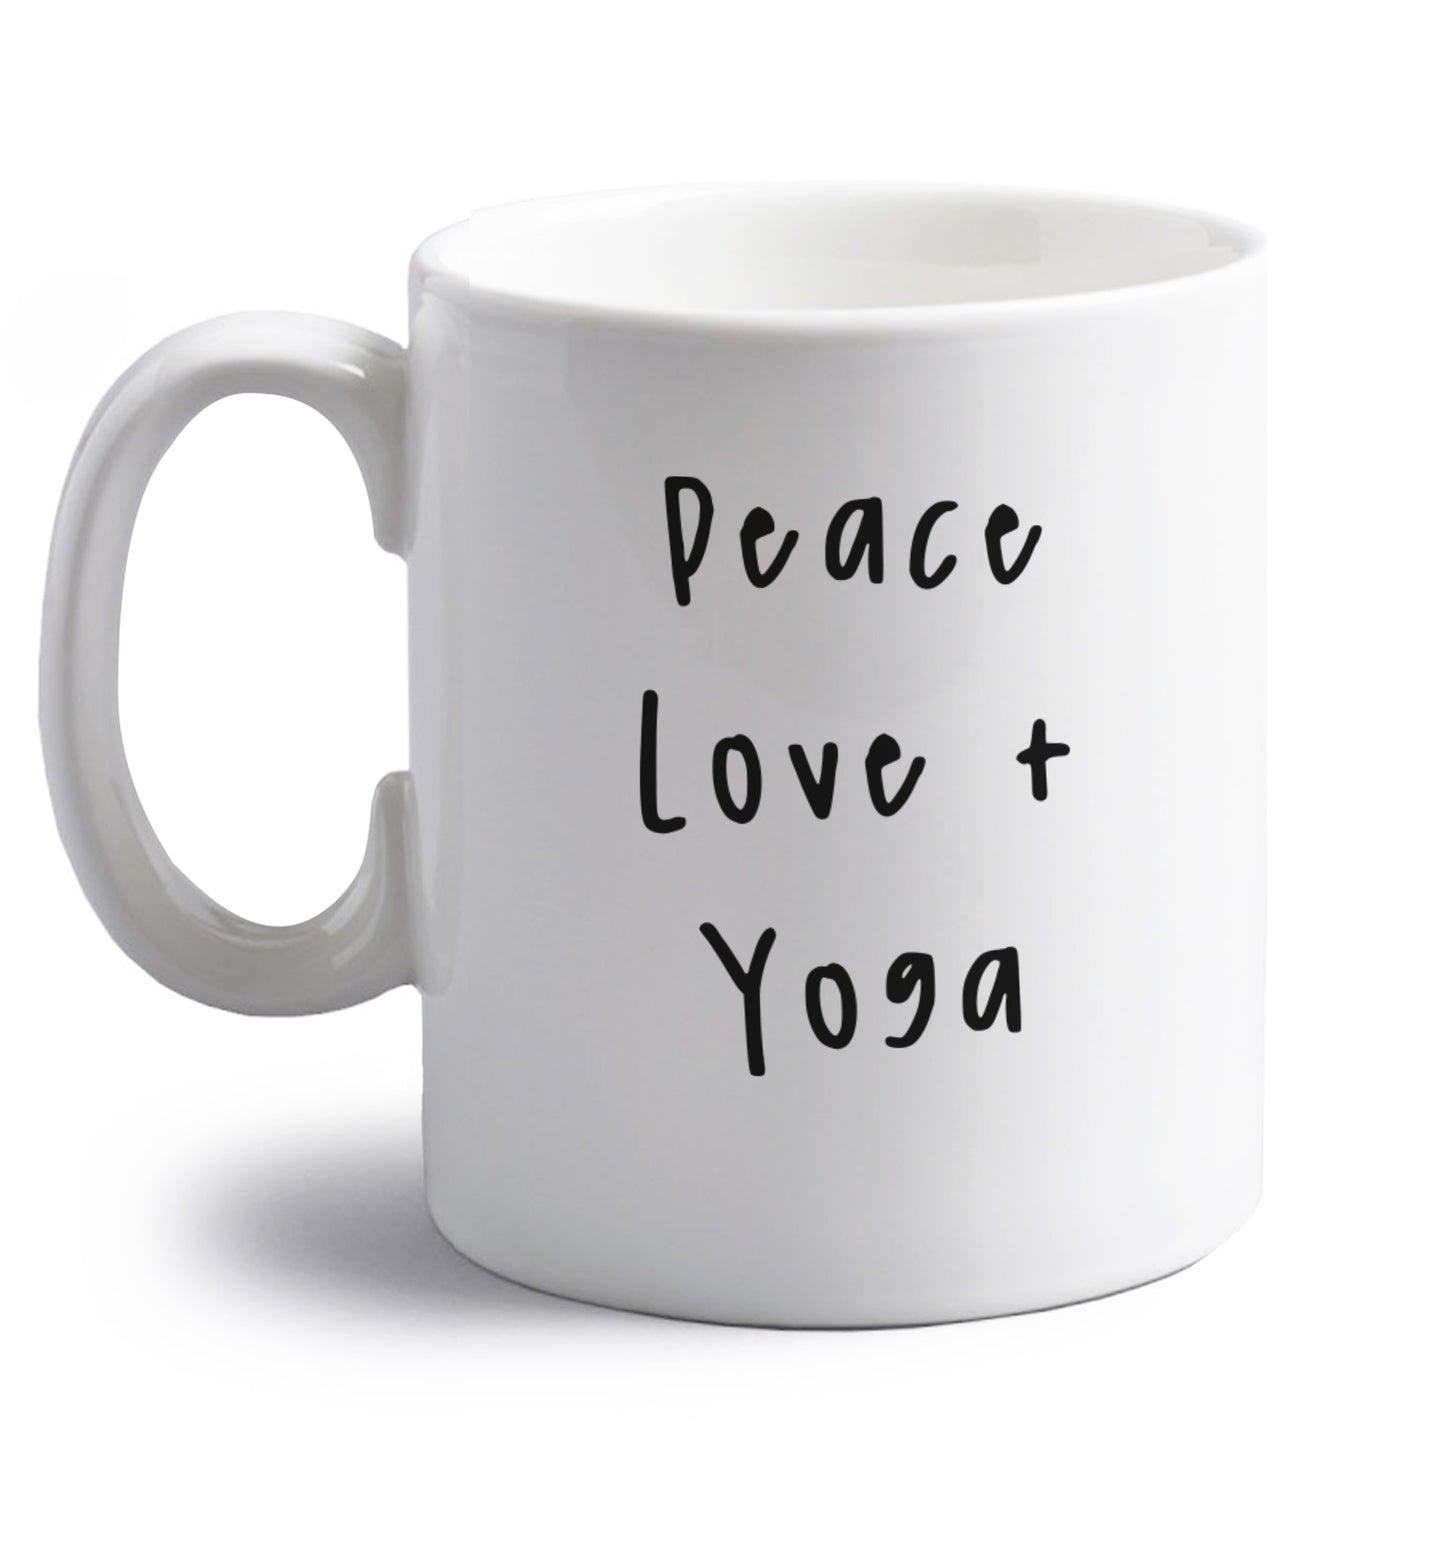 Peace love and yoga right handed white ceramic mug 